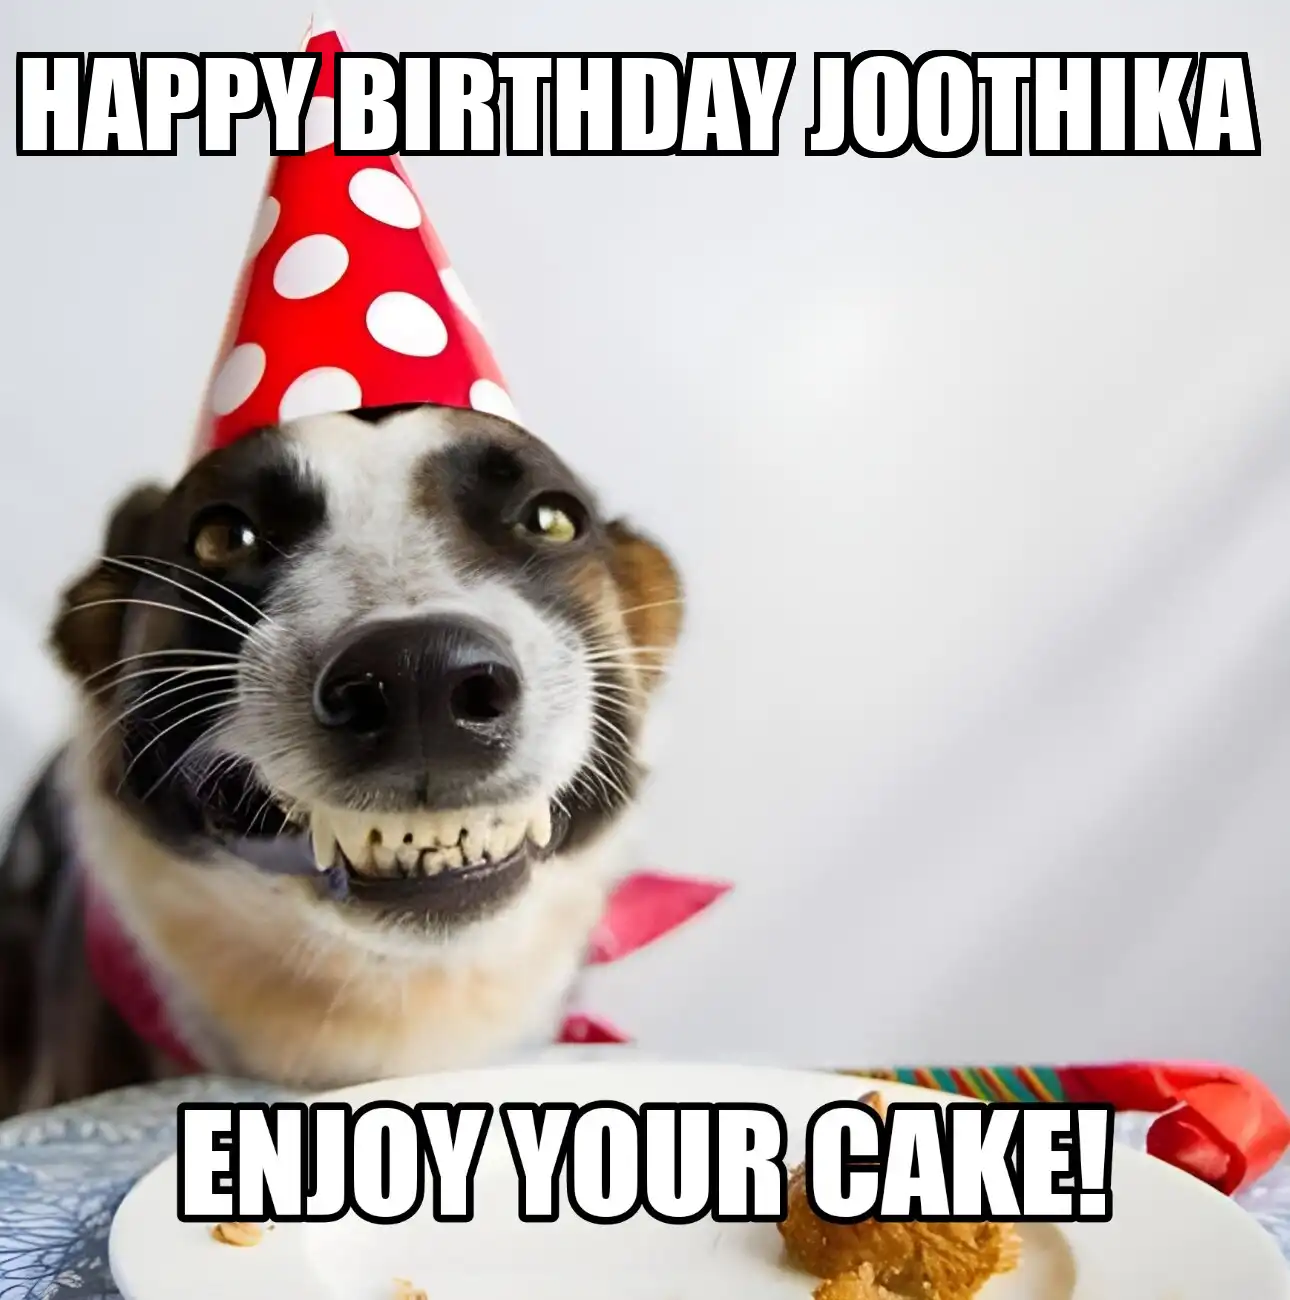 Happy Birthday Joothika Enjoy Your Cake Dog Meme